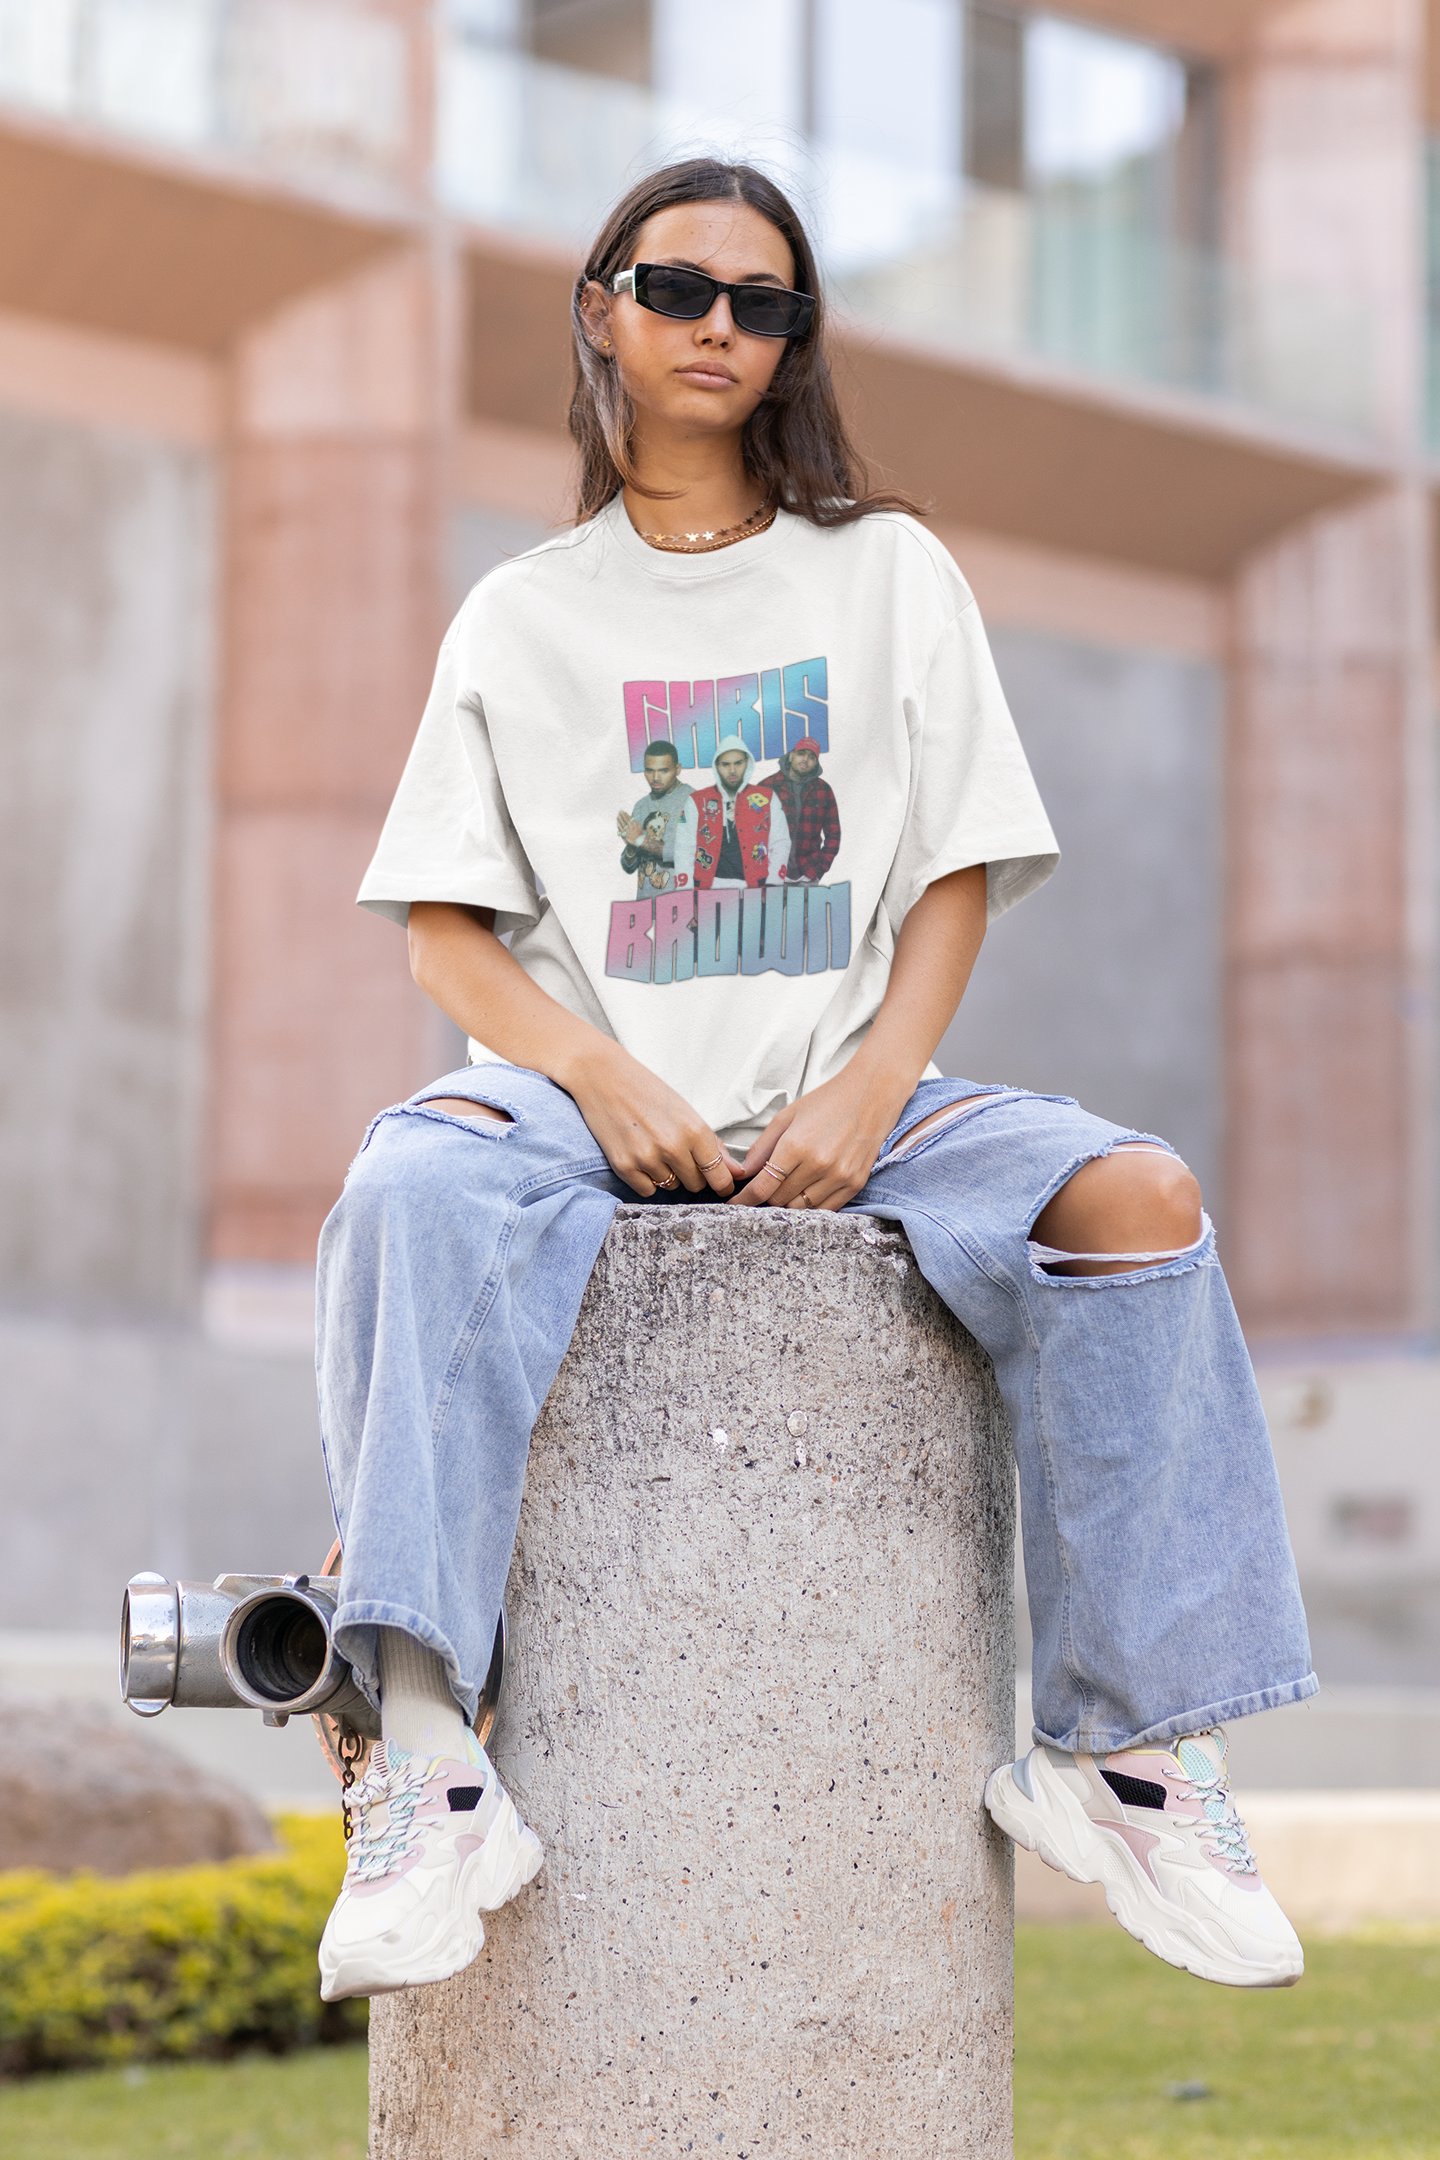 Custom Chris Brown | Breezy T-Shirt - Ourt